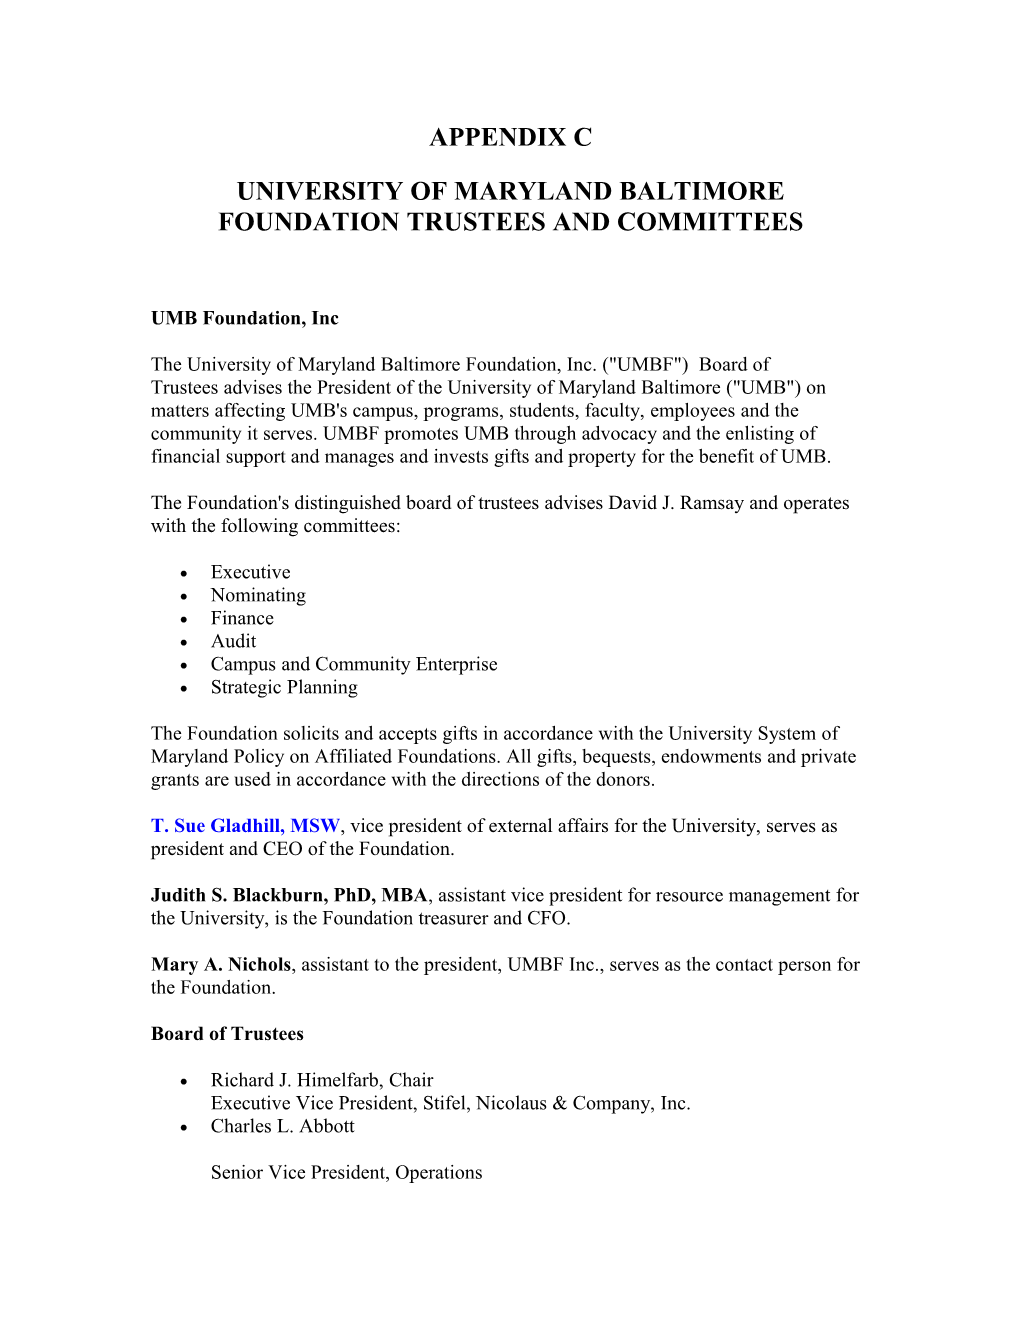 University of Marylandbaltimore Foundation Trustees and Committees